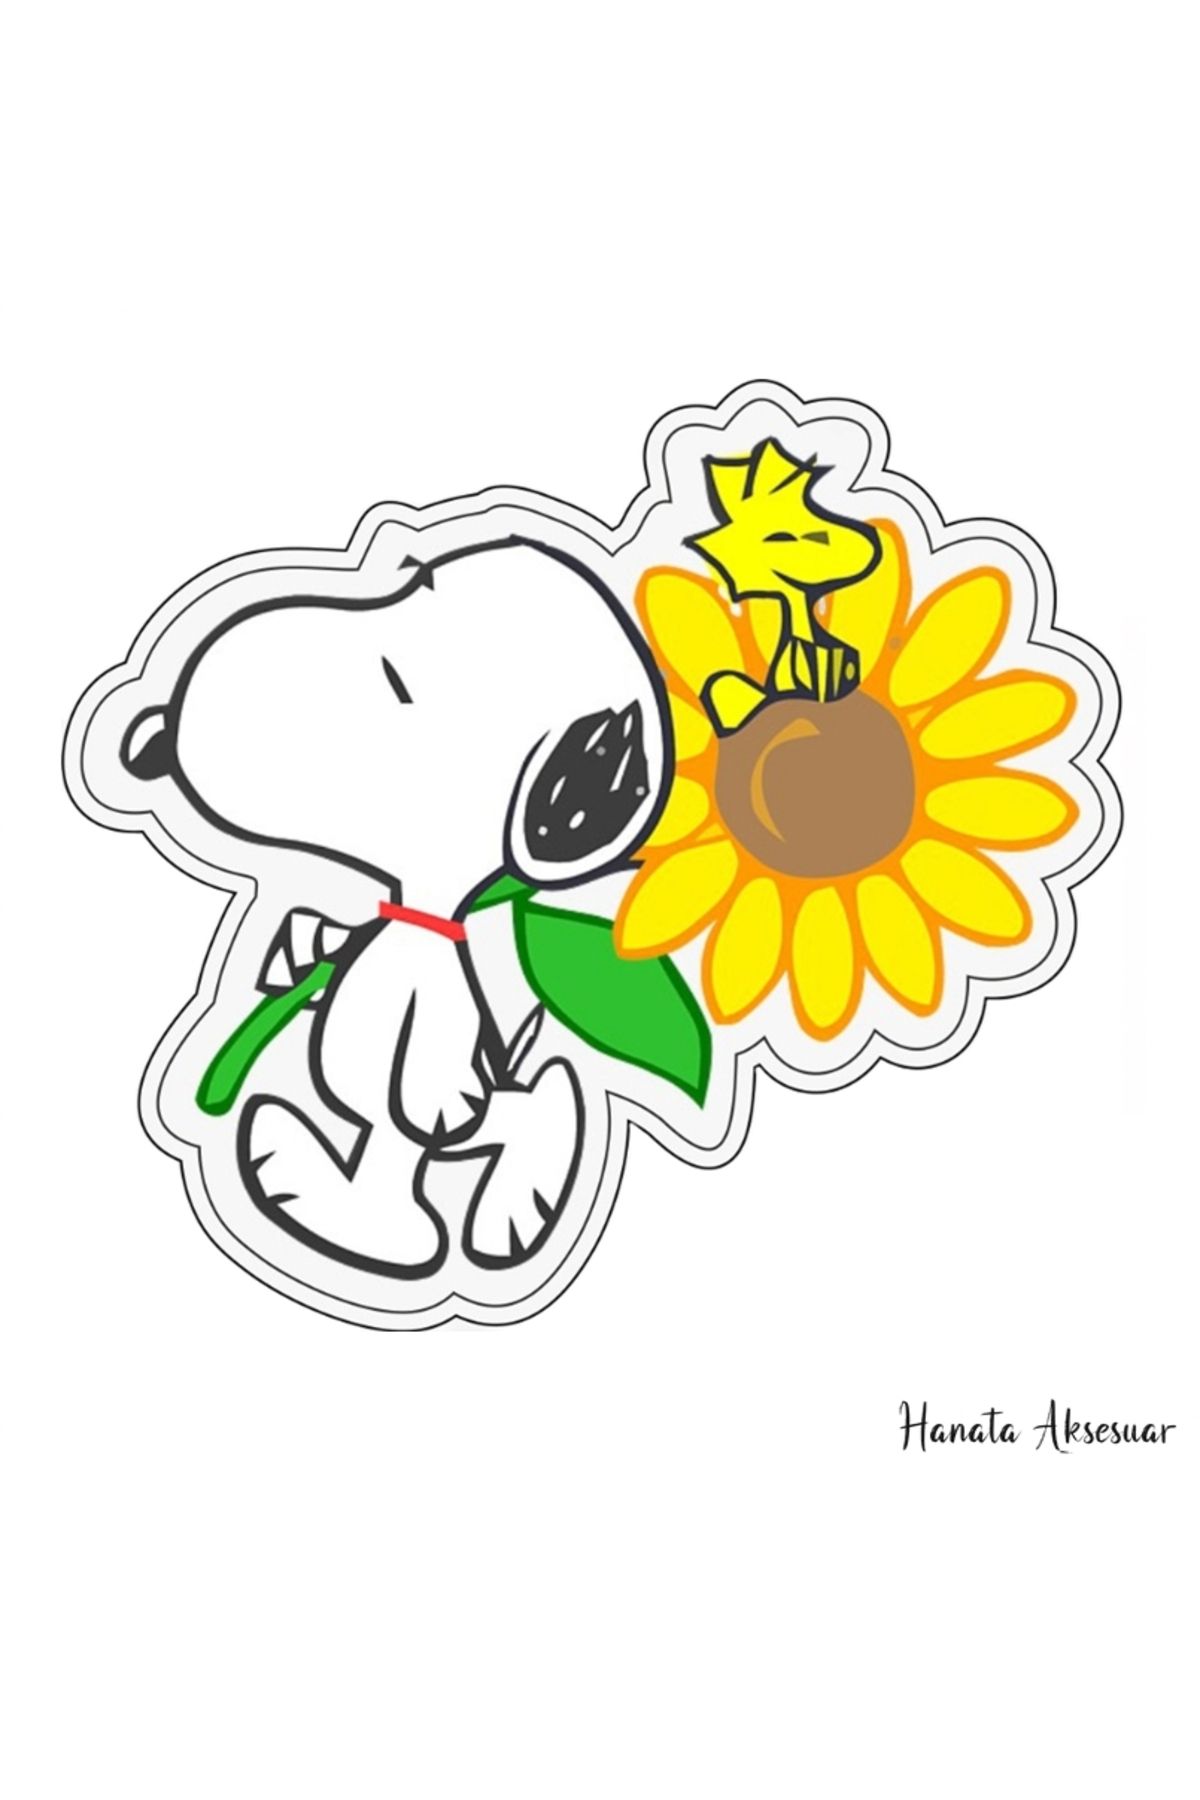 Hanata Aksesuar Snoopy Tasarımlı Dekoratif Oto Kokusu Ve Aksesuarı